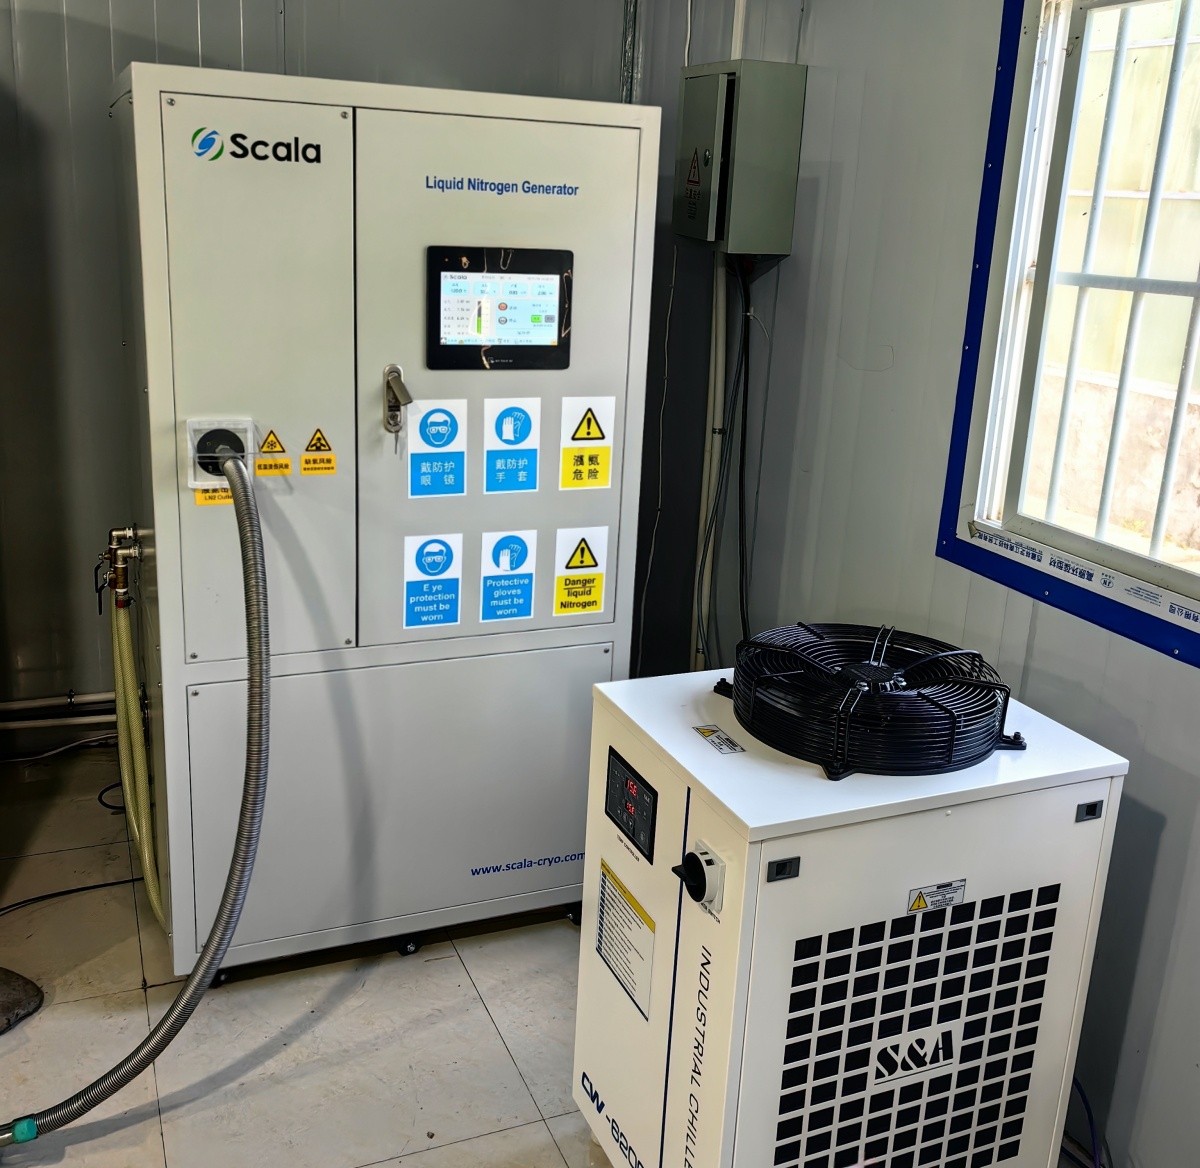 Scala LNS20W liquid nitrogen generator 